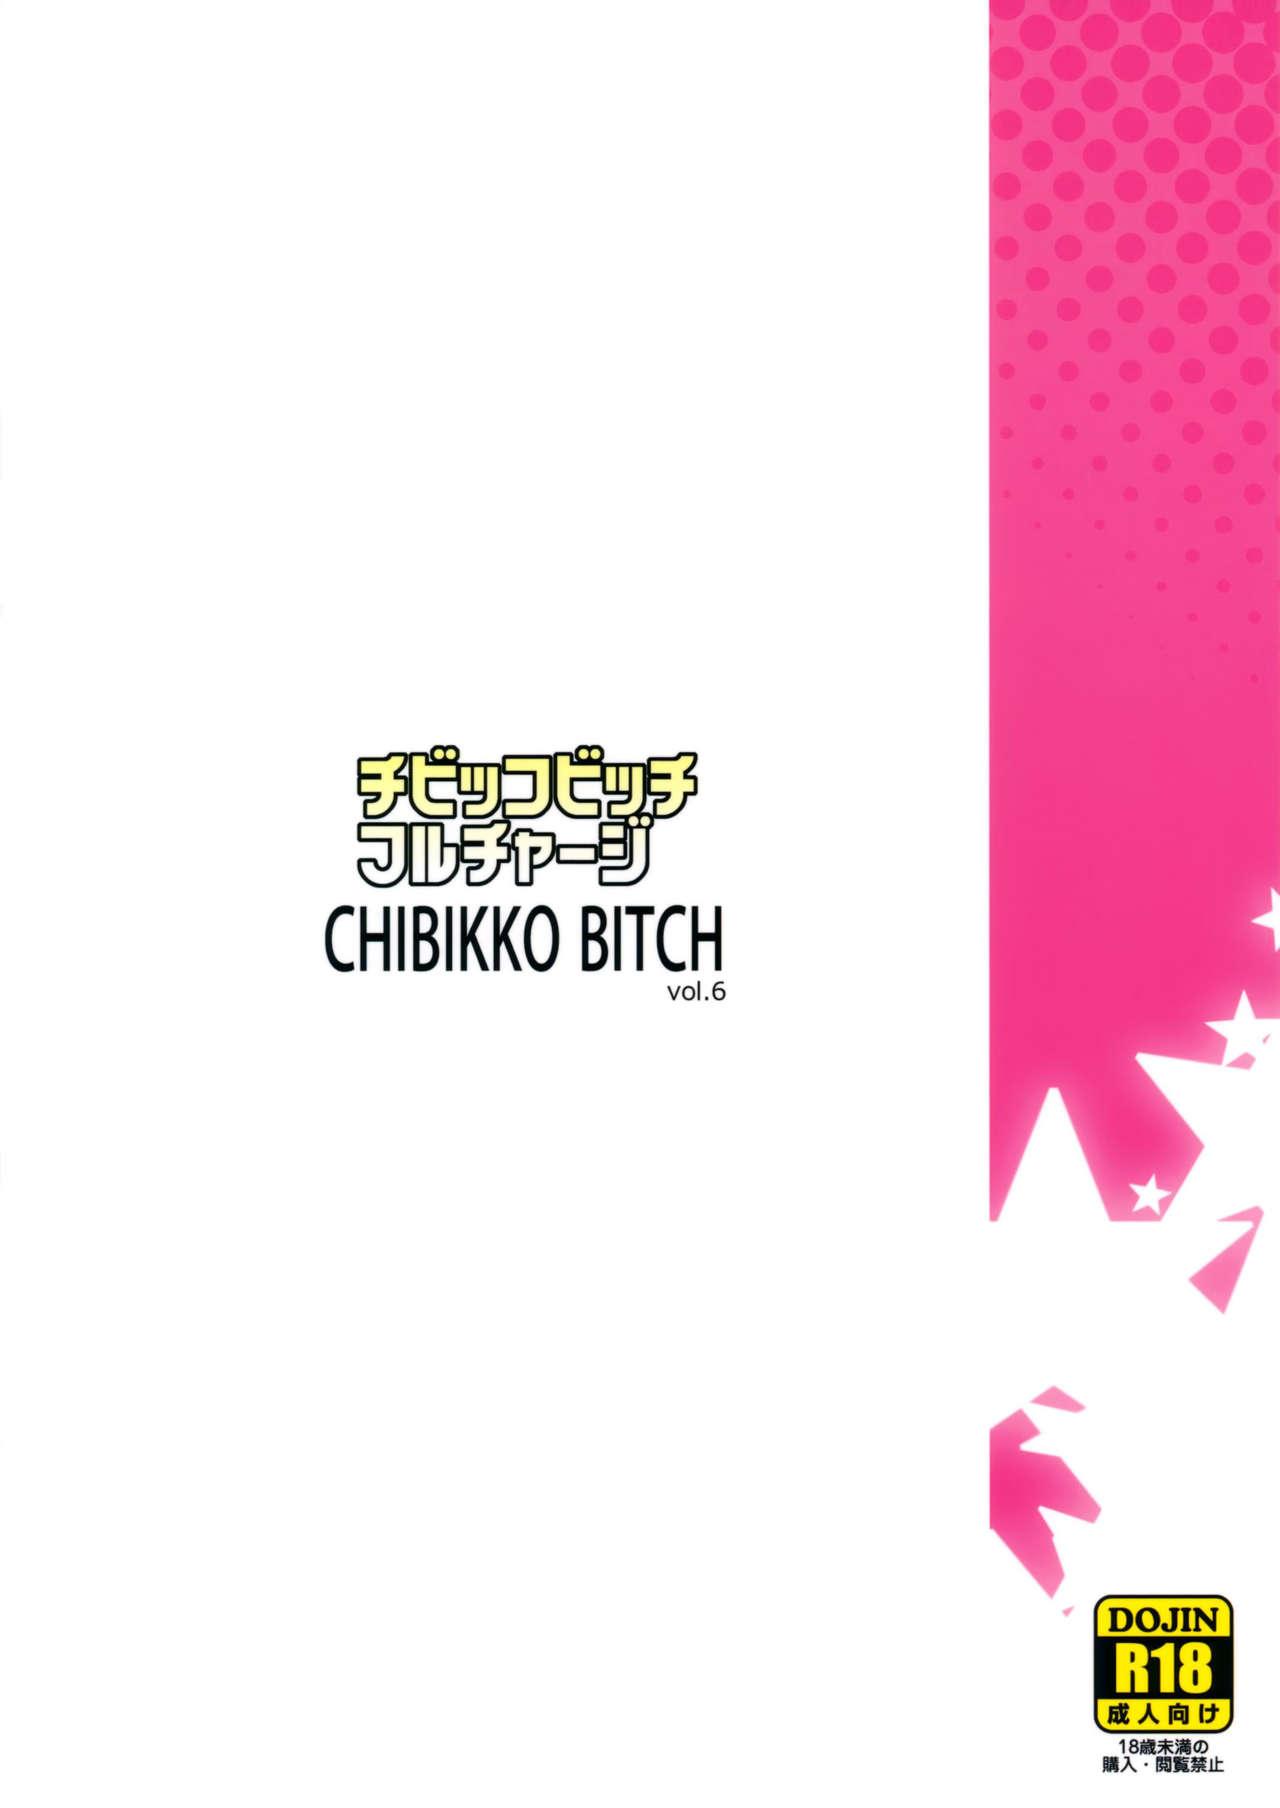 Chibikko Bitch Full charge 25